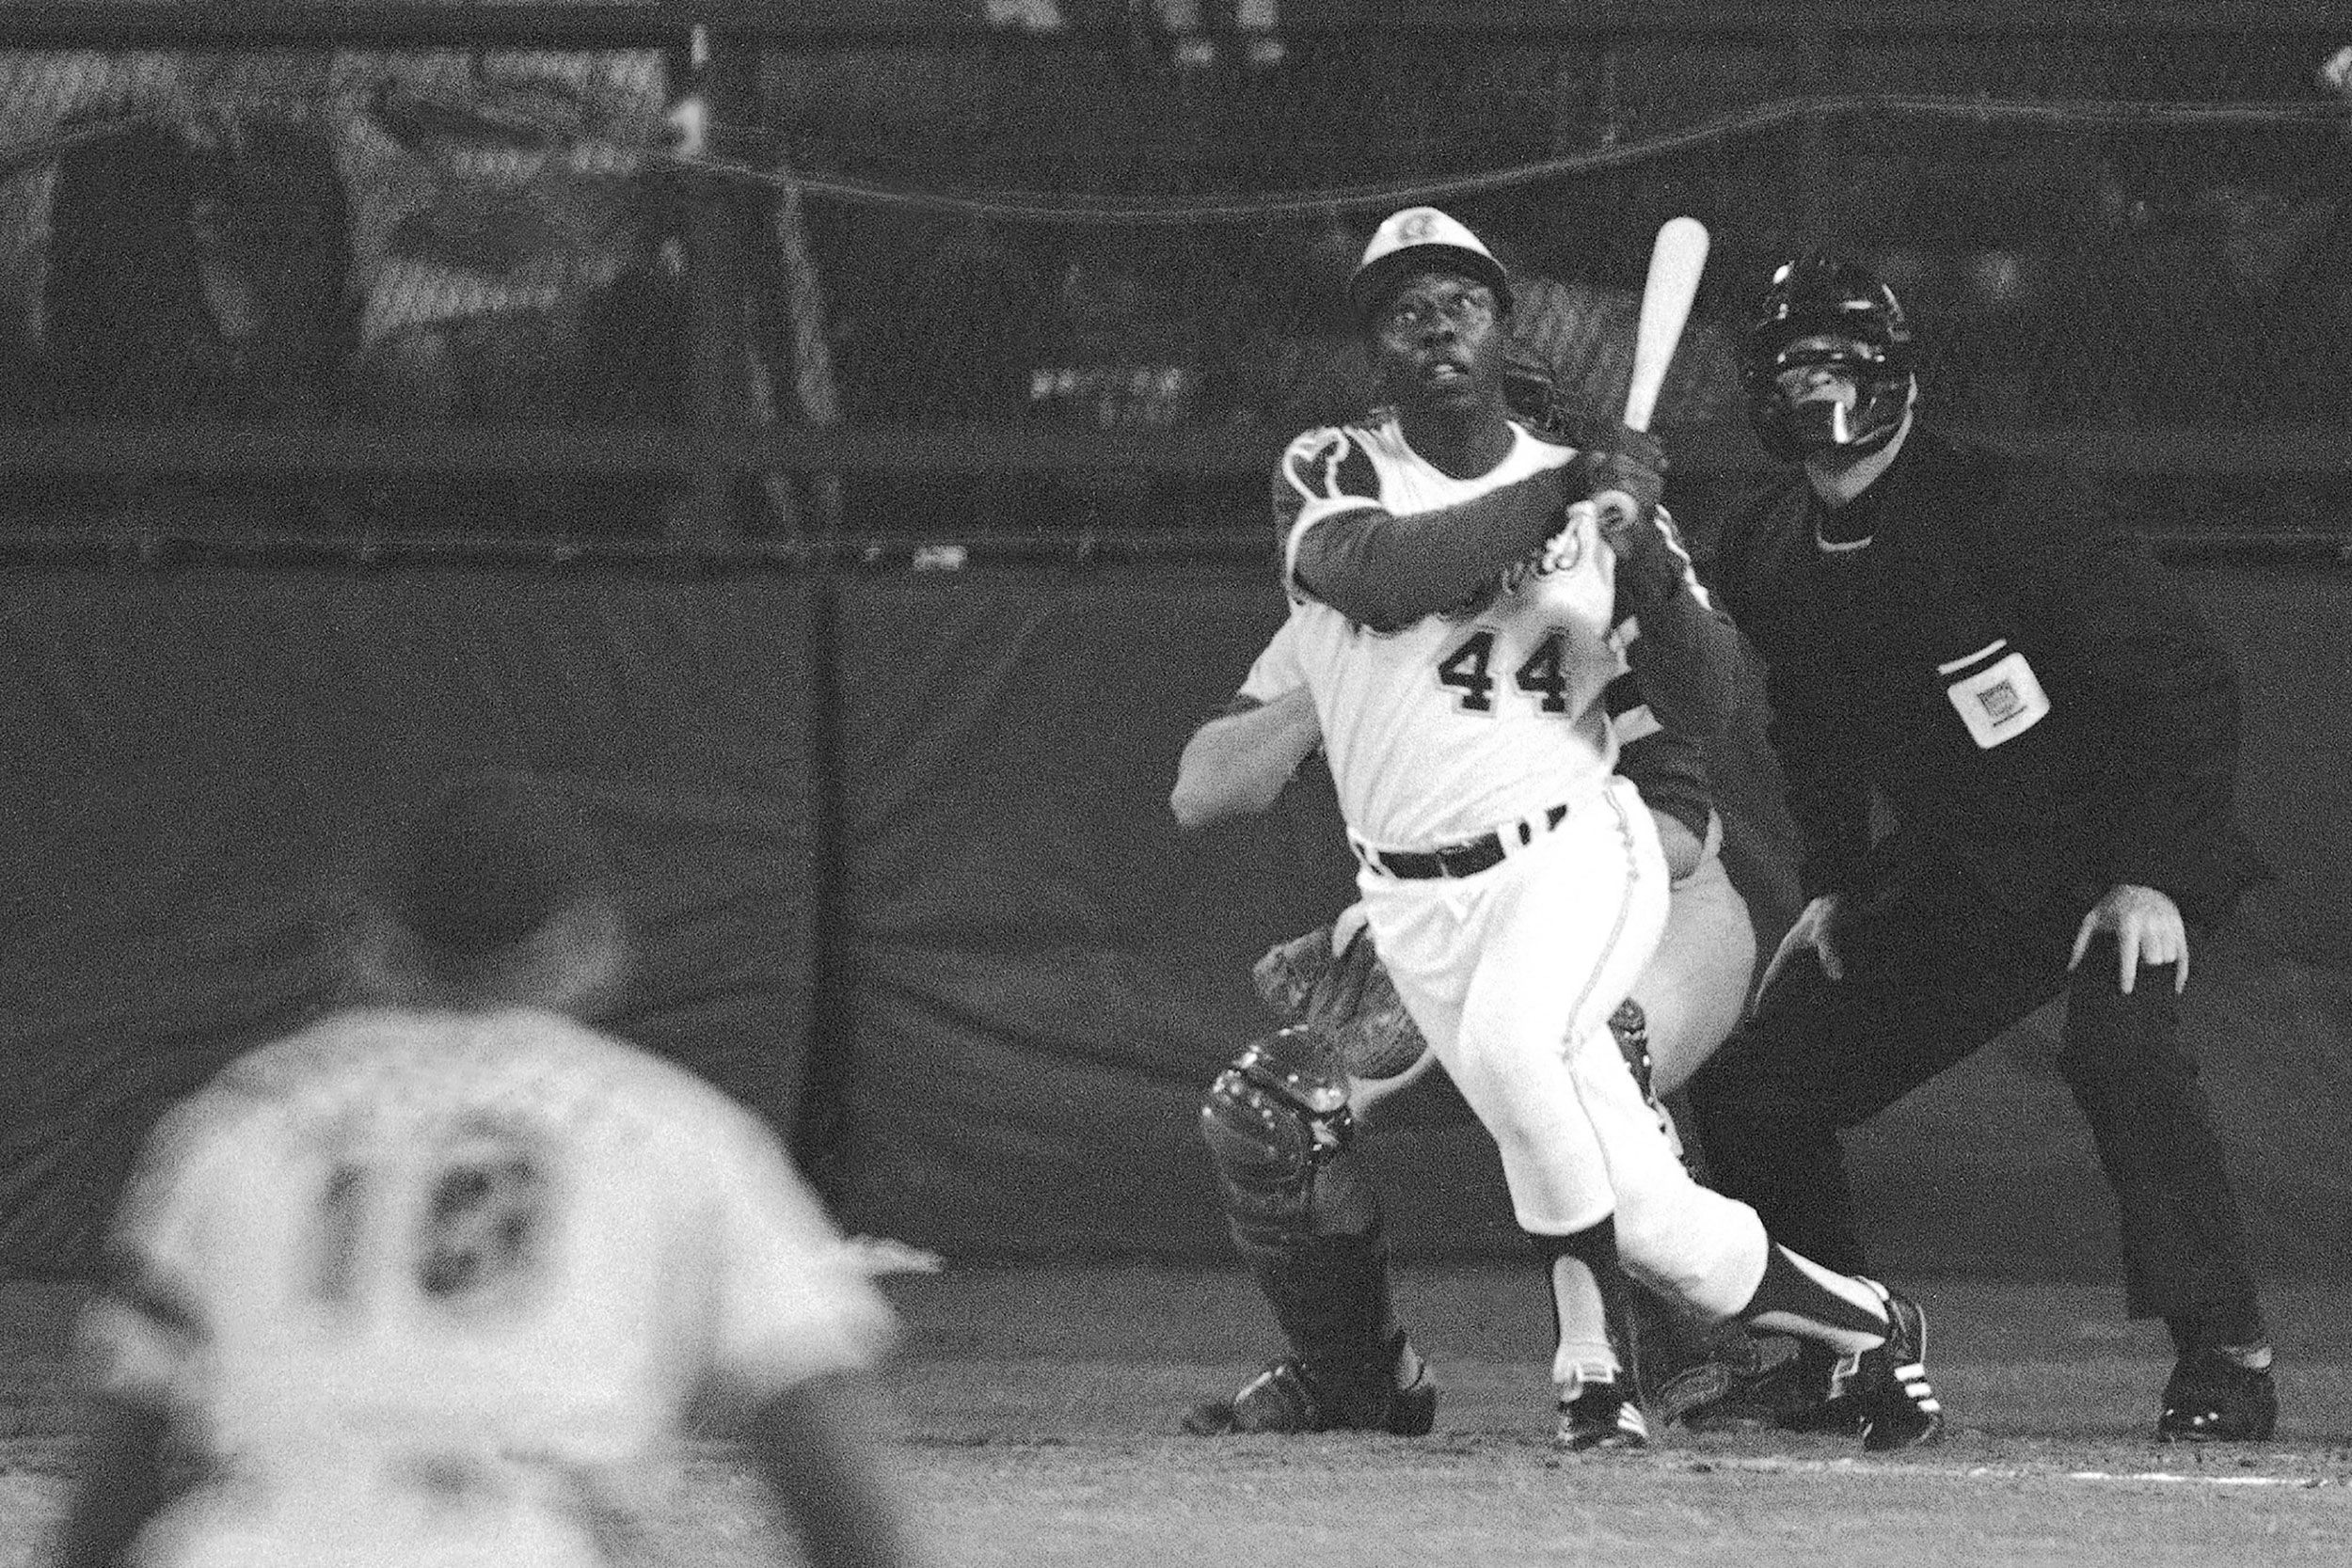 Hank Aaron: Baseball icon and civil rights activist dies aged 86